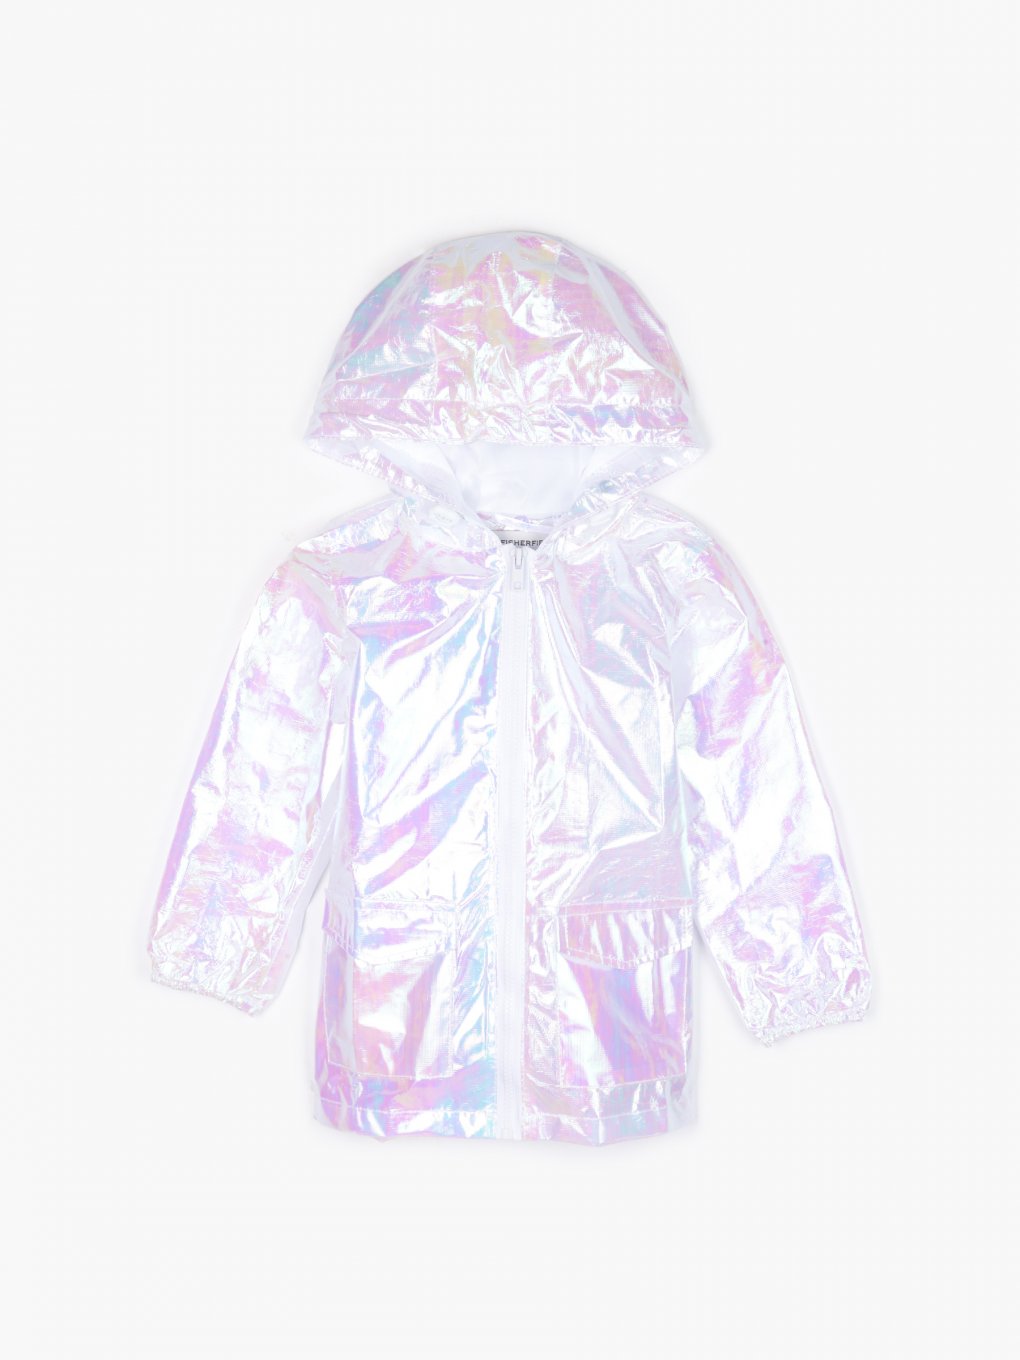 Holographic hooded light jacket